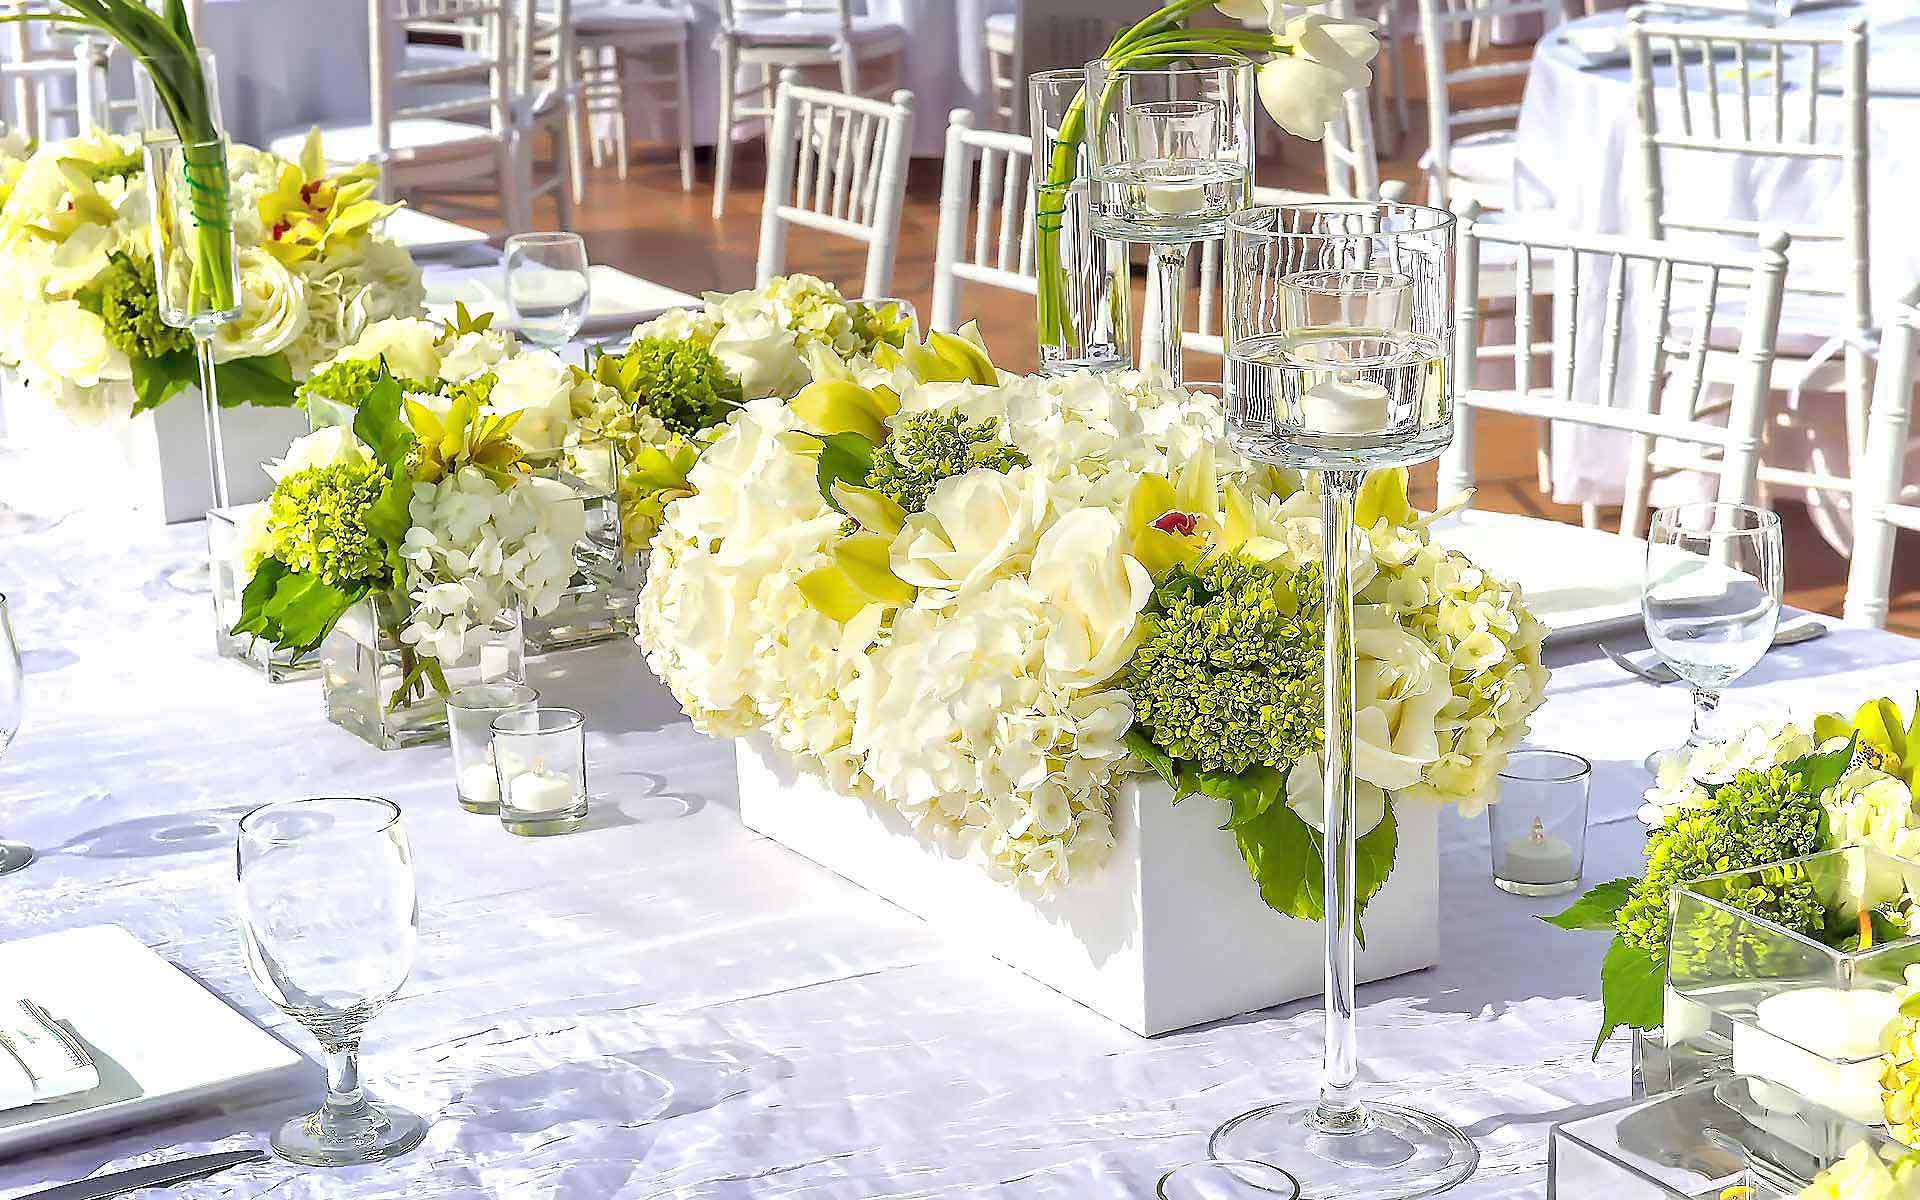 Nice Flower Arrangement Set Up In A Wedding Reception Table